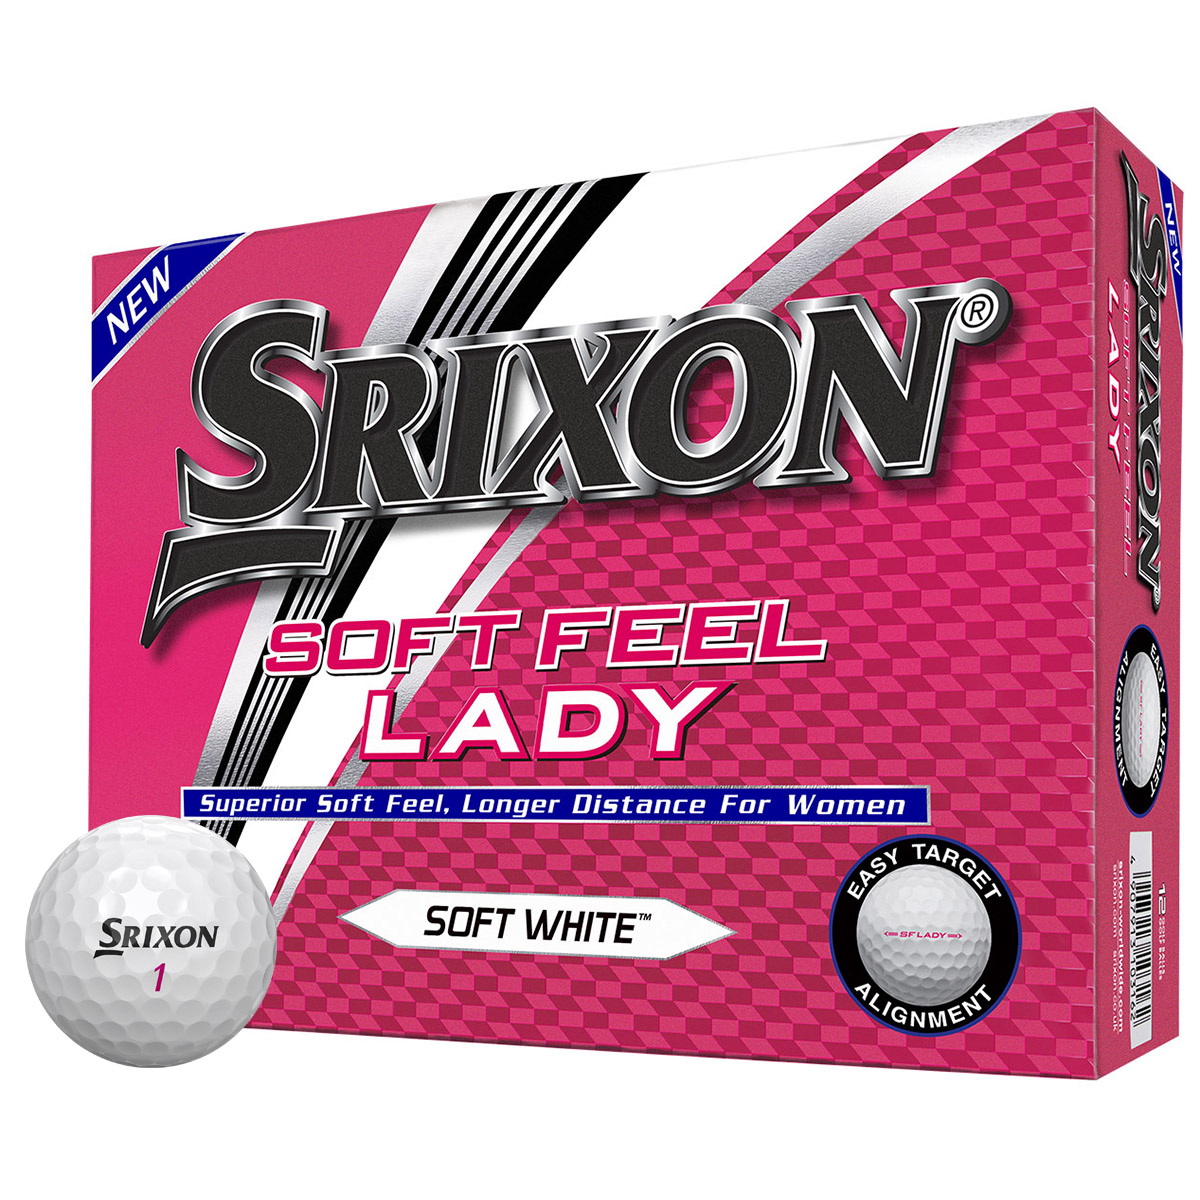 Srixon Soft Feel Lady 12 Ball Pack 2018 From American Golf